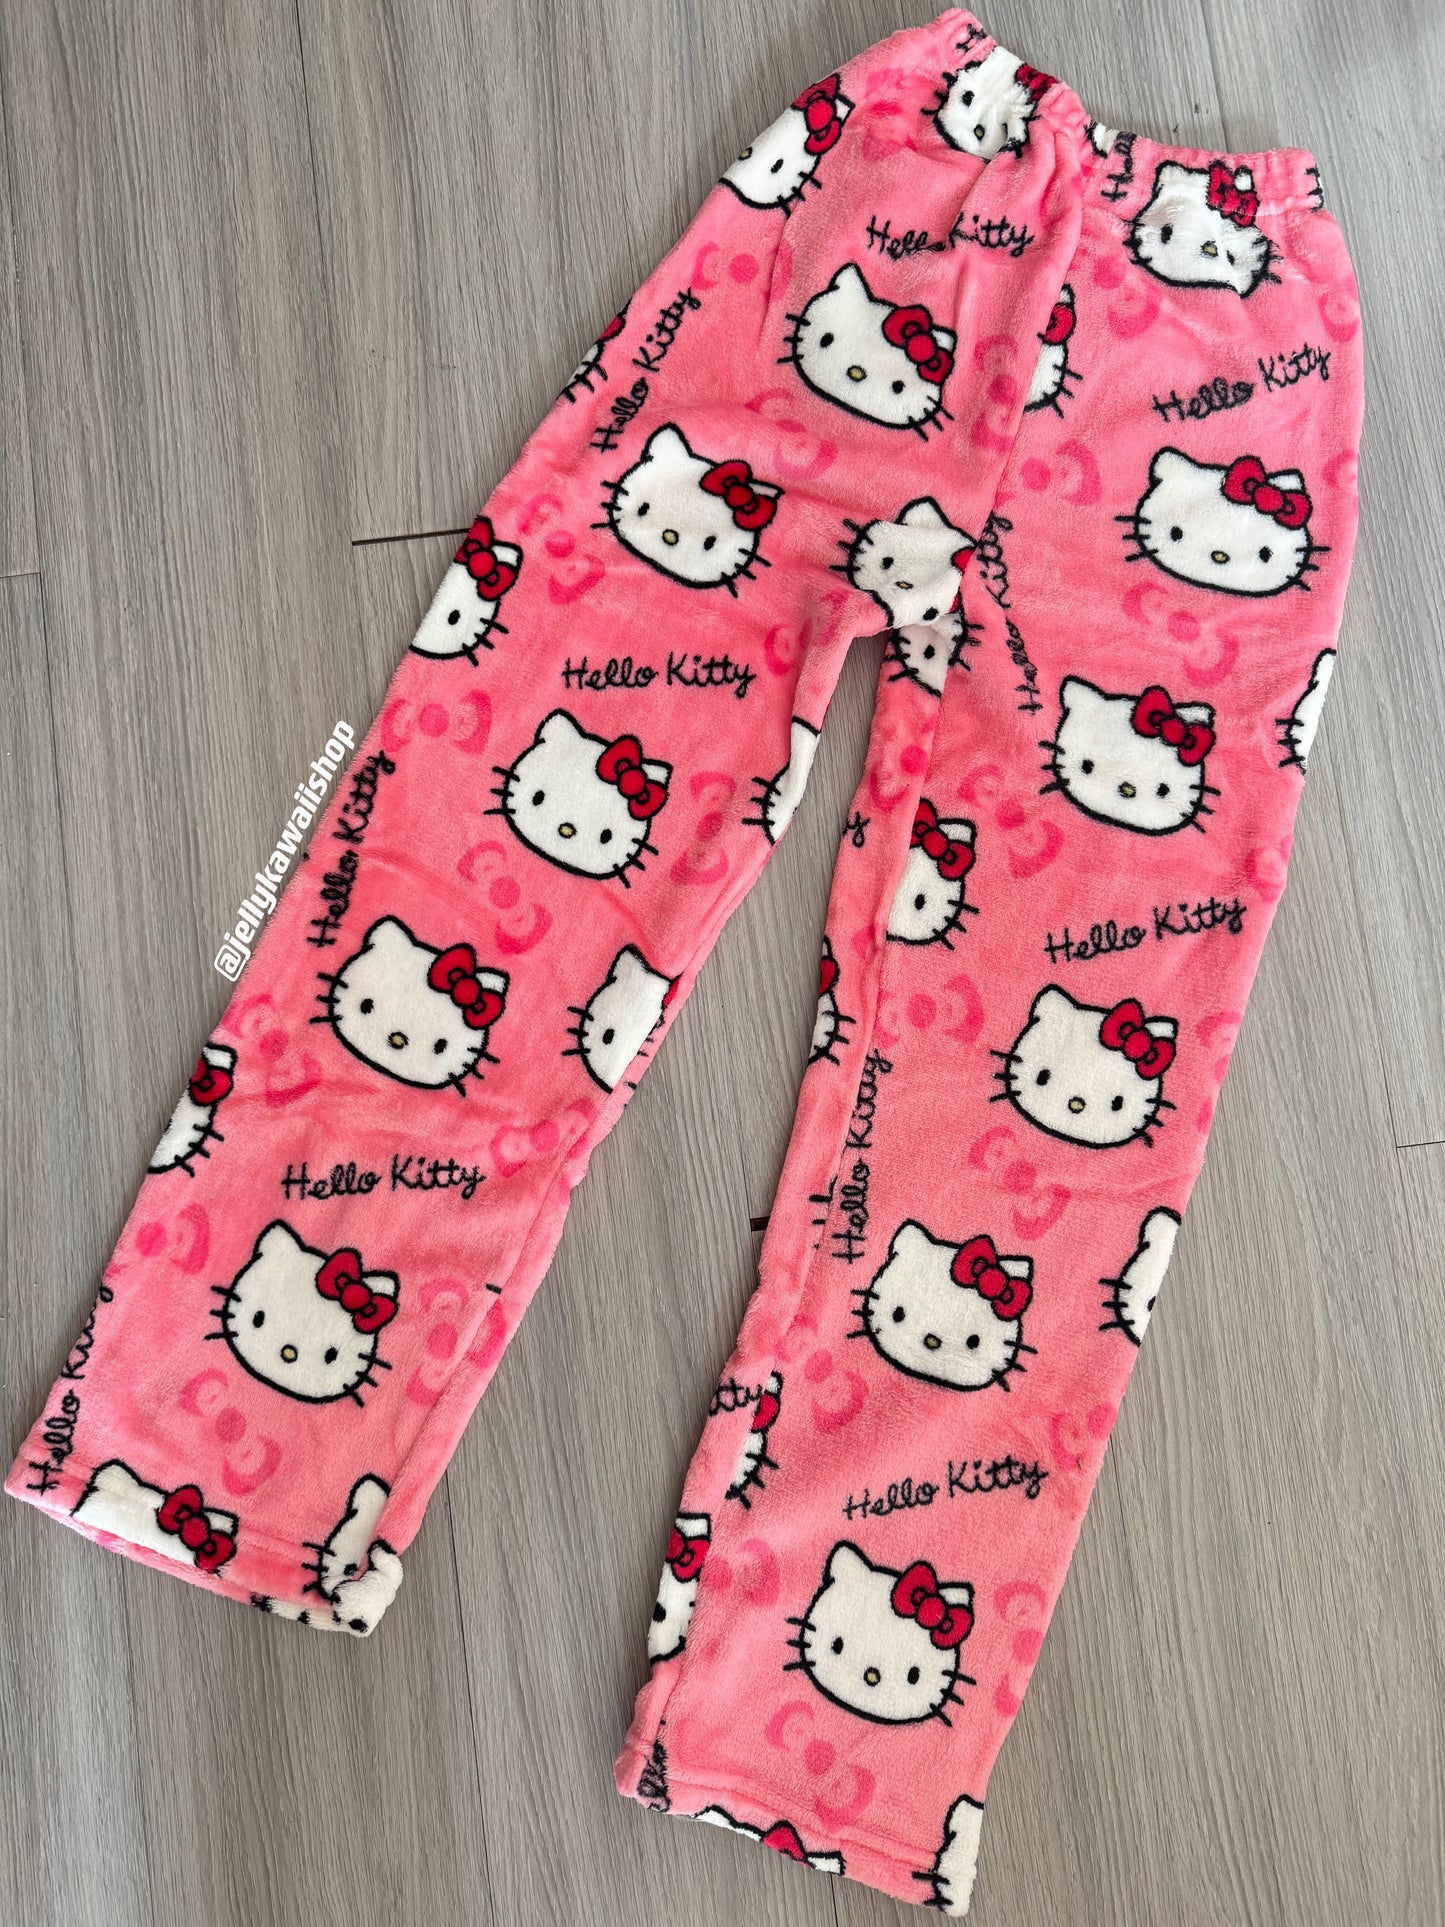 KT Christmas Pants Pajama Cute Soft Long Bottoms Women Pjs Pj Jammies Gift